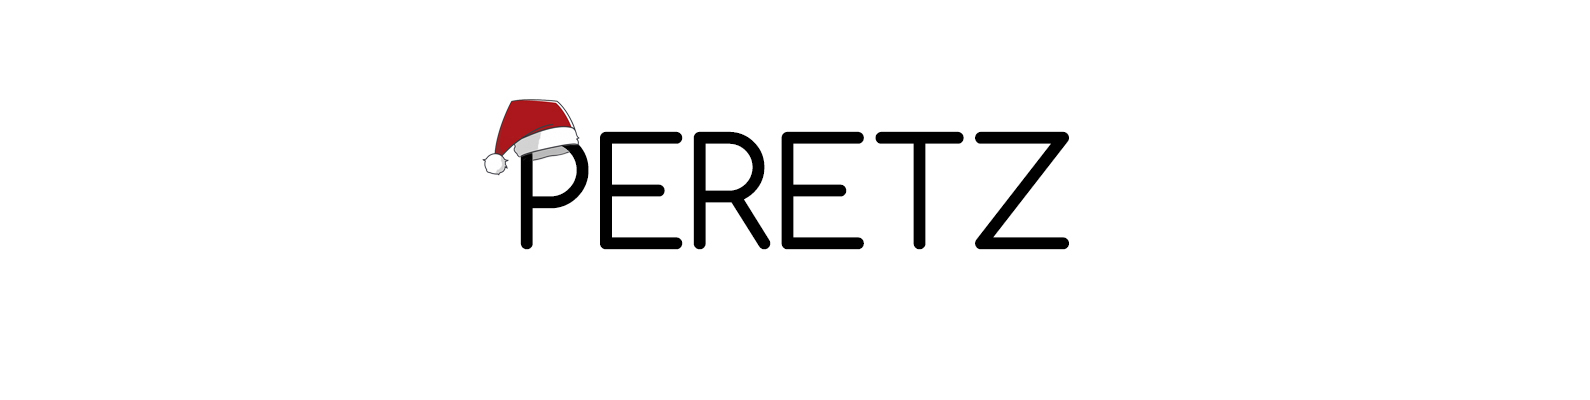 creator cover PERETZ